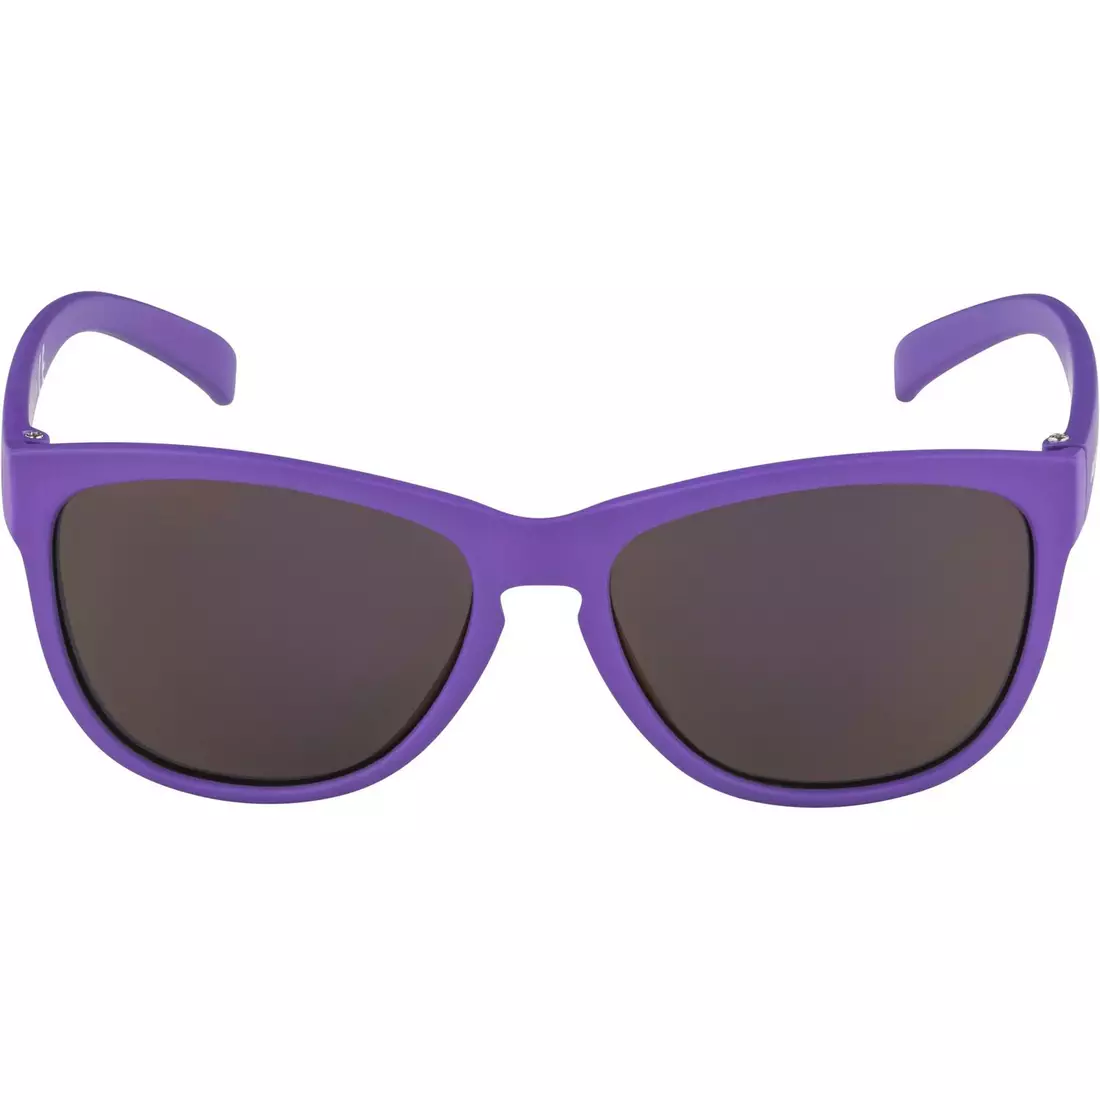 ALPINA JUNIOR LUZY Fahrrad-/Sportbrille, purple matt